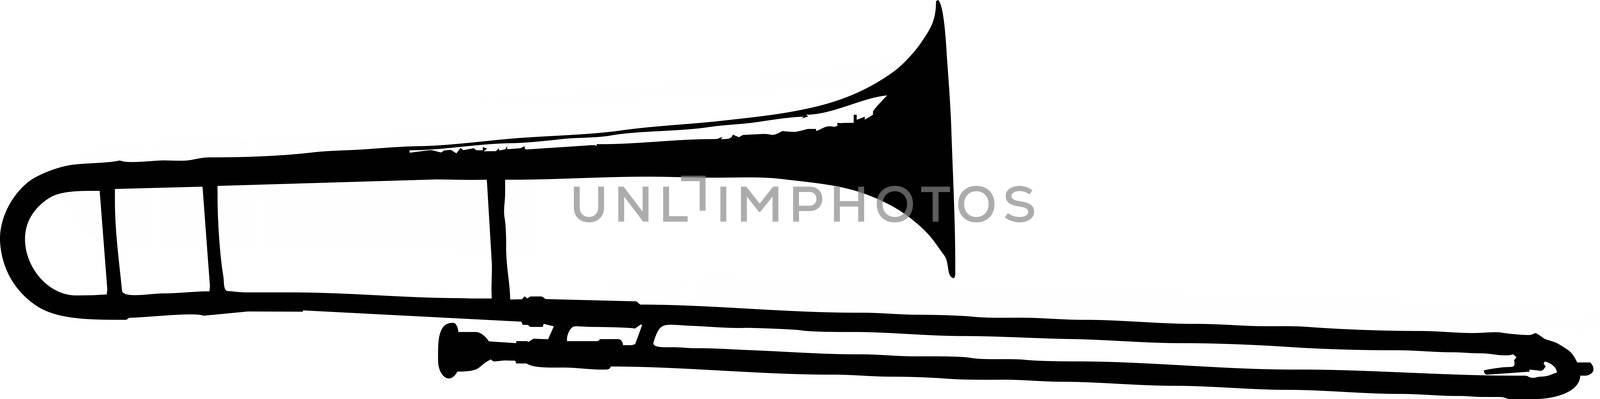 trombone silhouette - isolated vector illustration